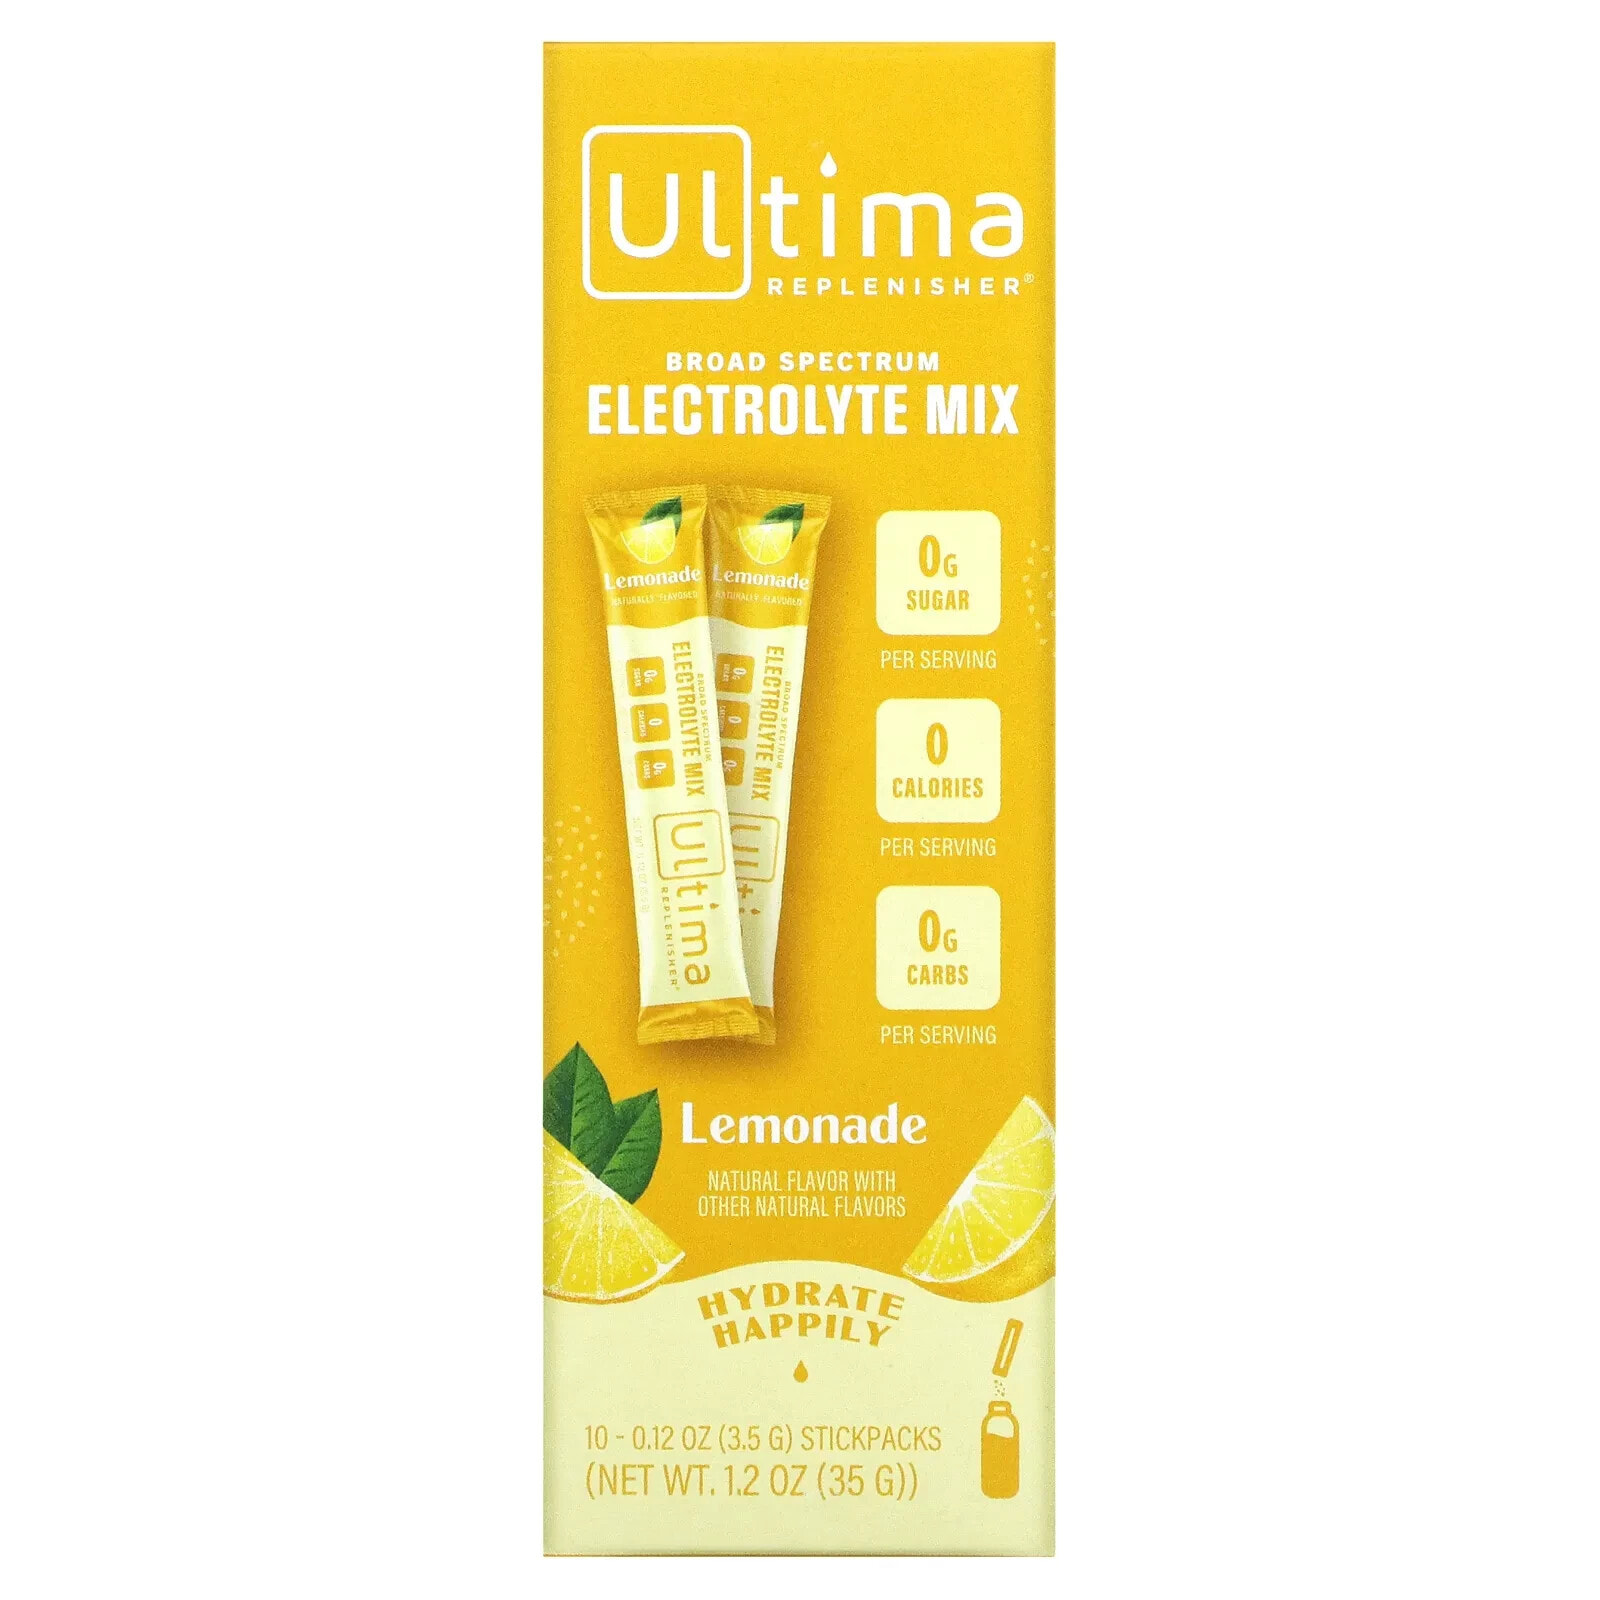 Broad Spectrum Electrolyte Mix, Lemonade, 10 Packets, 0.12 oz (3.5 g) Each